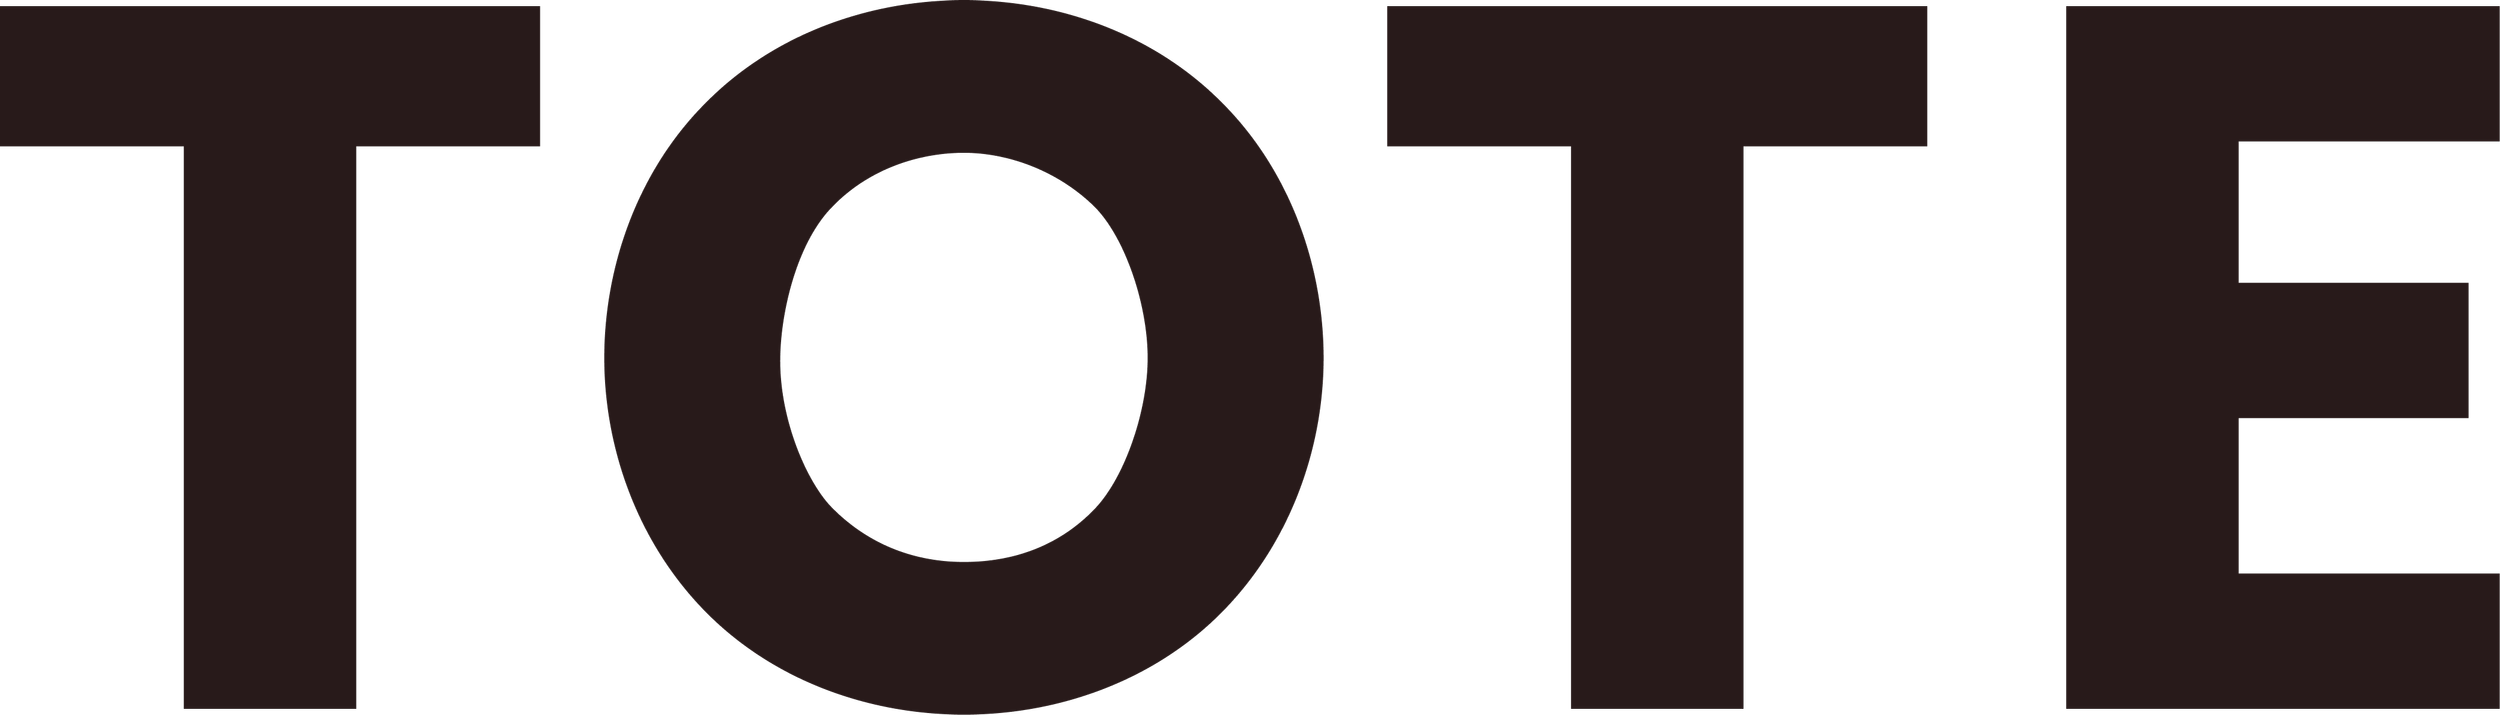 TOTE Logo.png